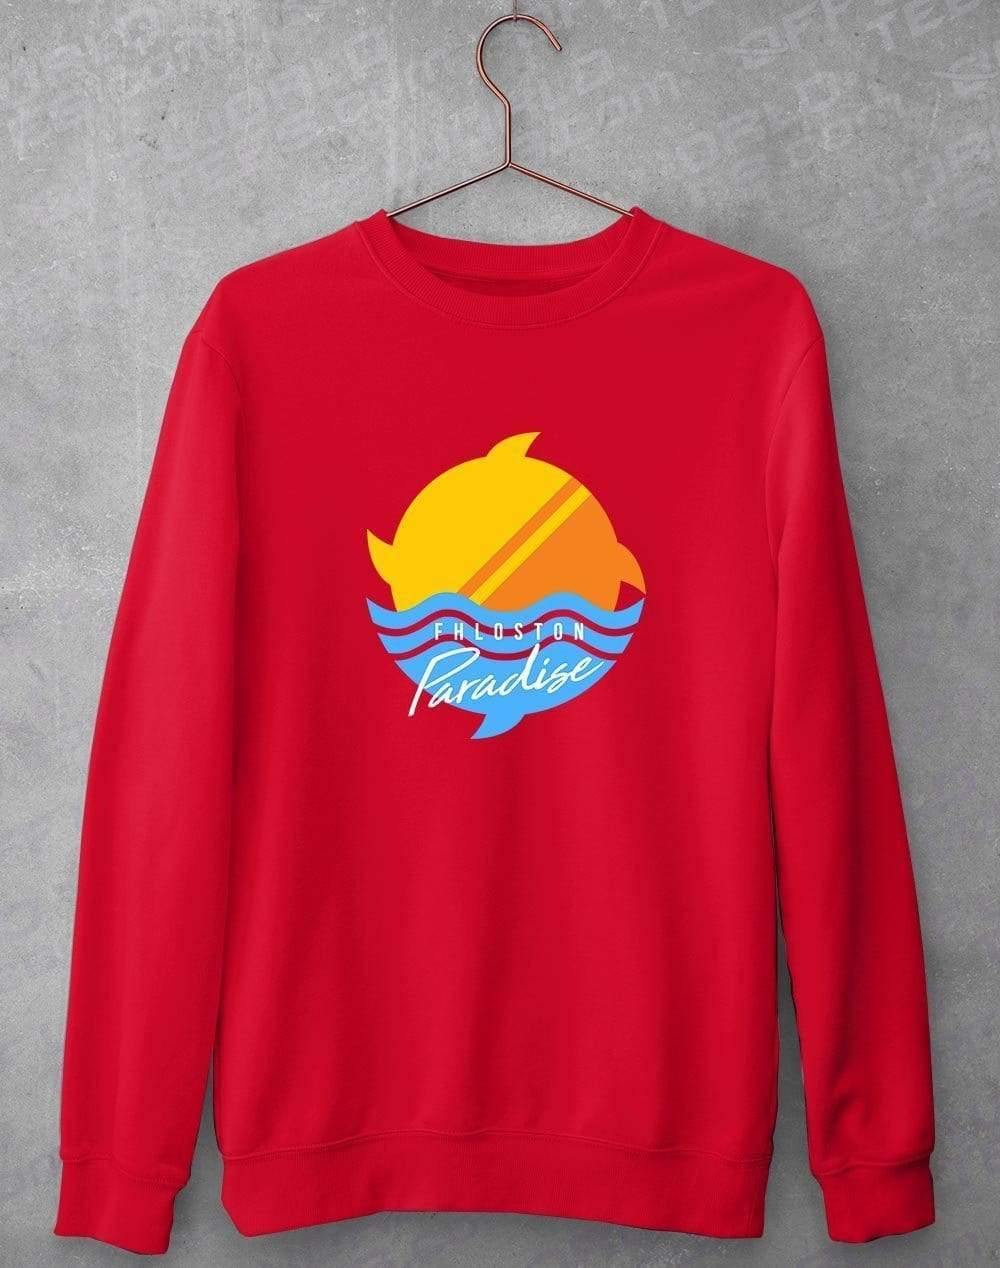 Fhloston Paradise Classic Sweatshirt S / Fire Red  - Off World Tees